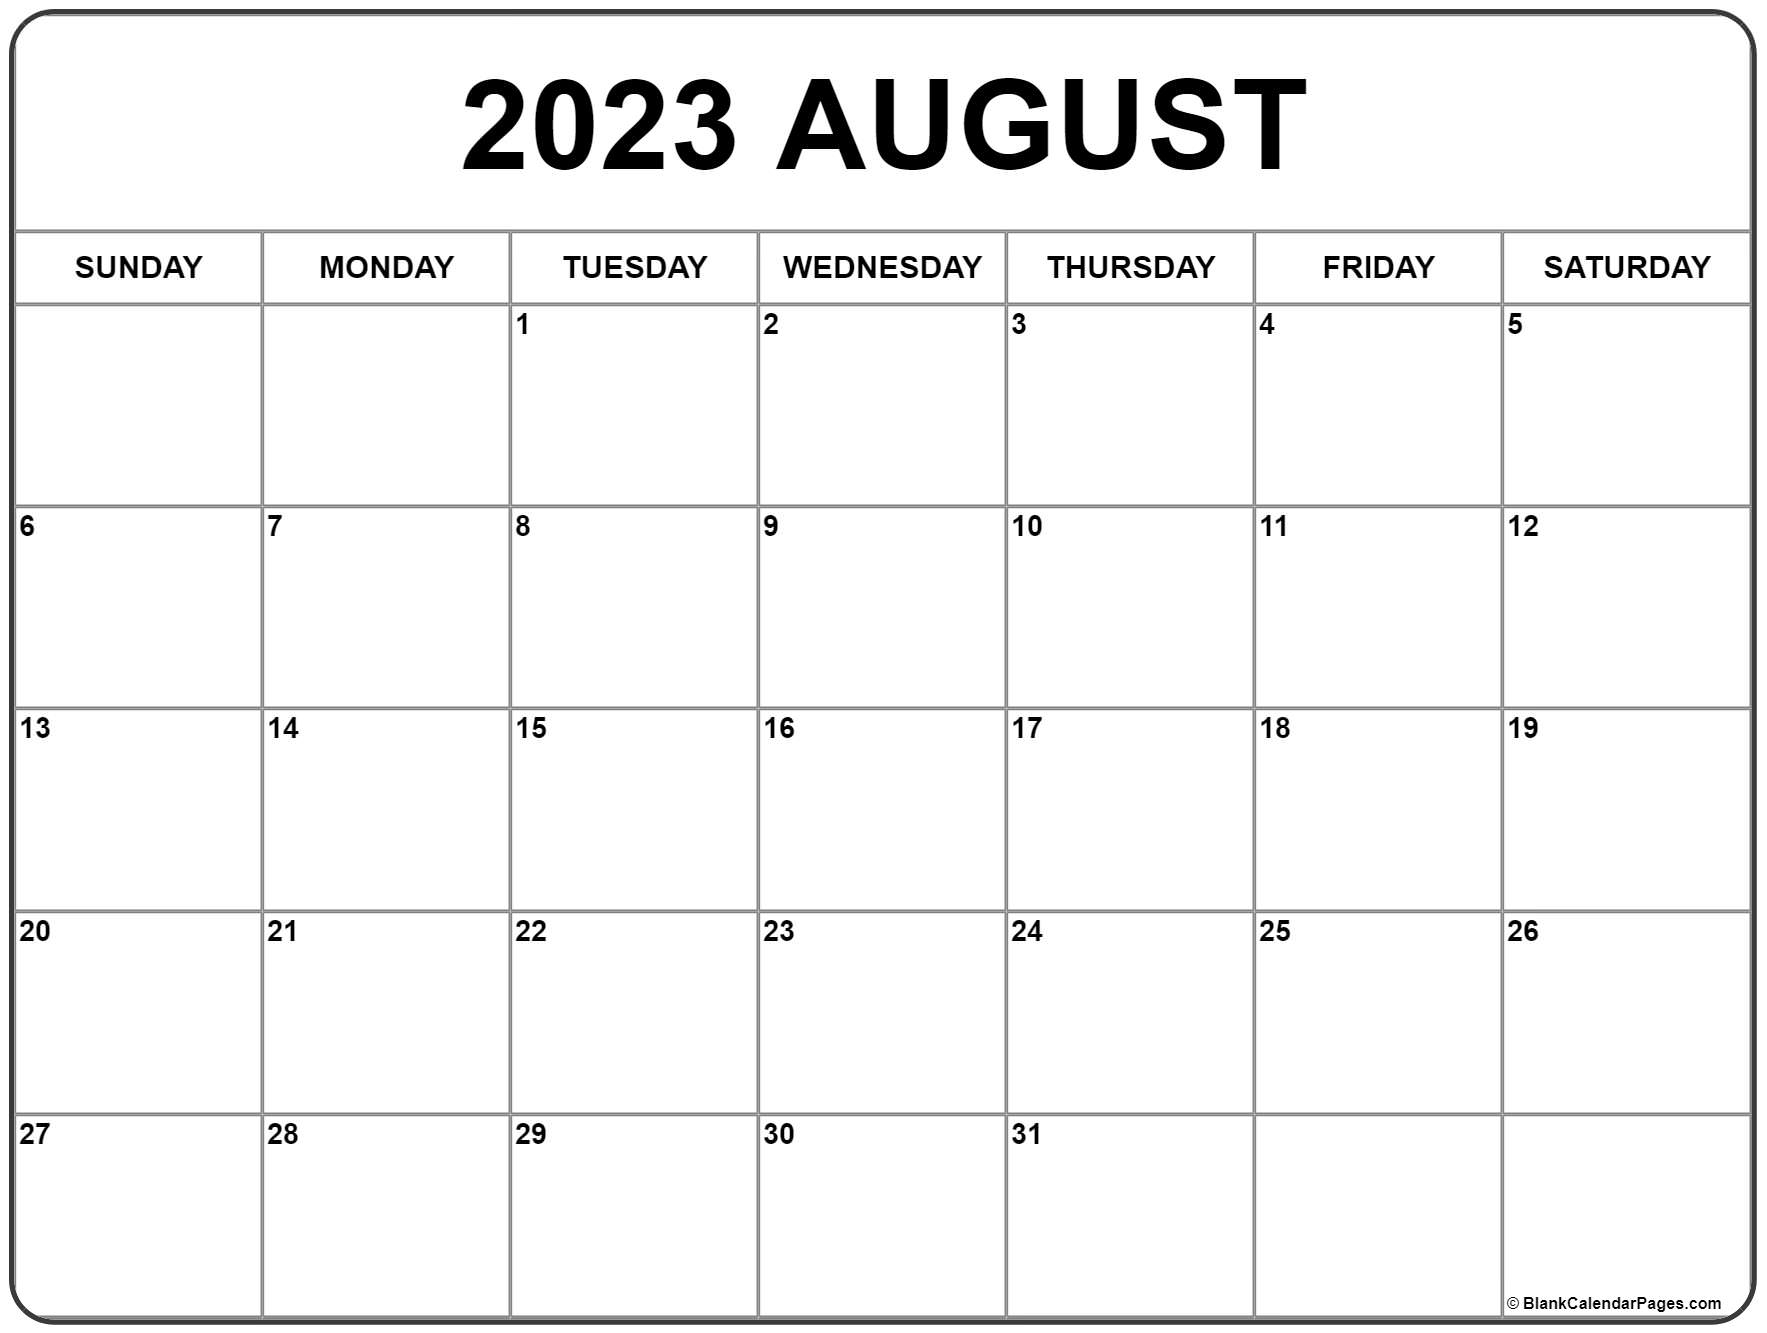 2023 August Printable Calender